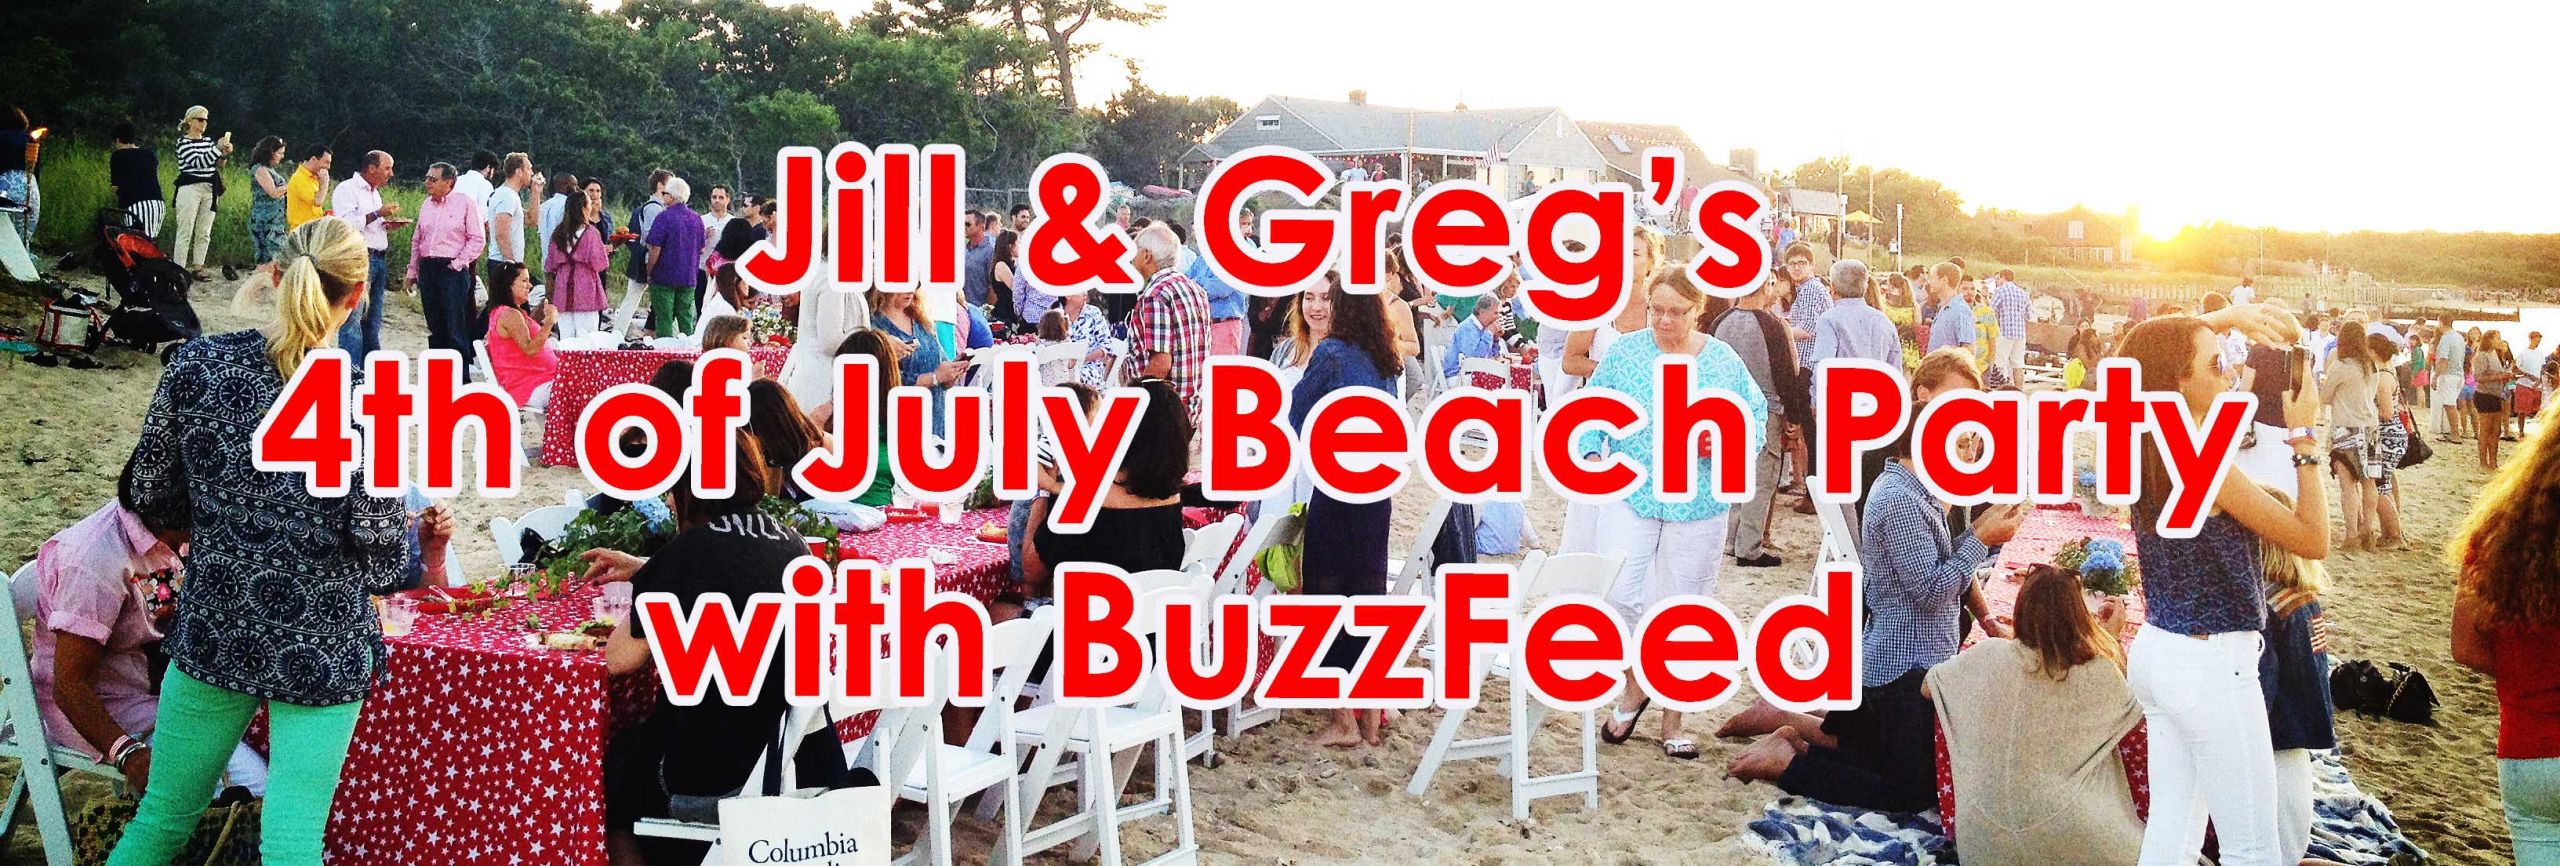 4th Of July Beach Party
 Event Spotlight Jill & Greg’s 4th of July Beach Party